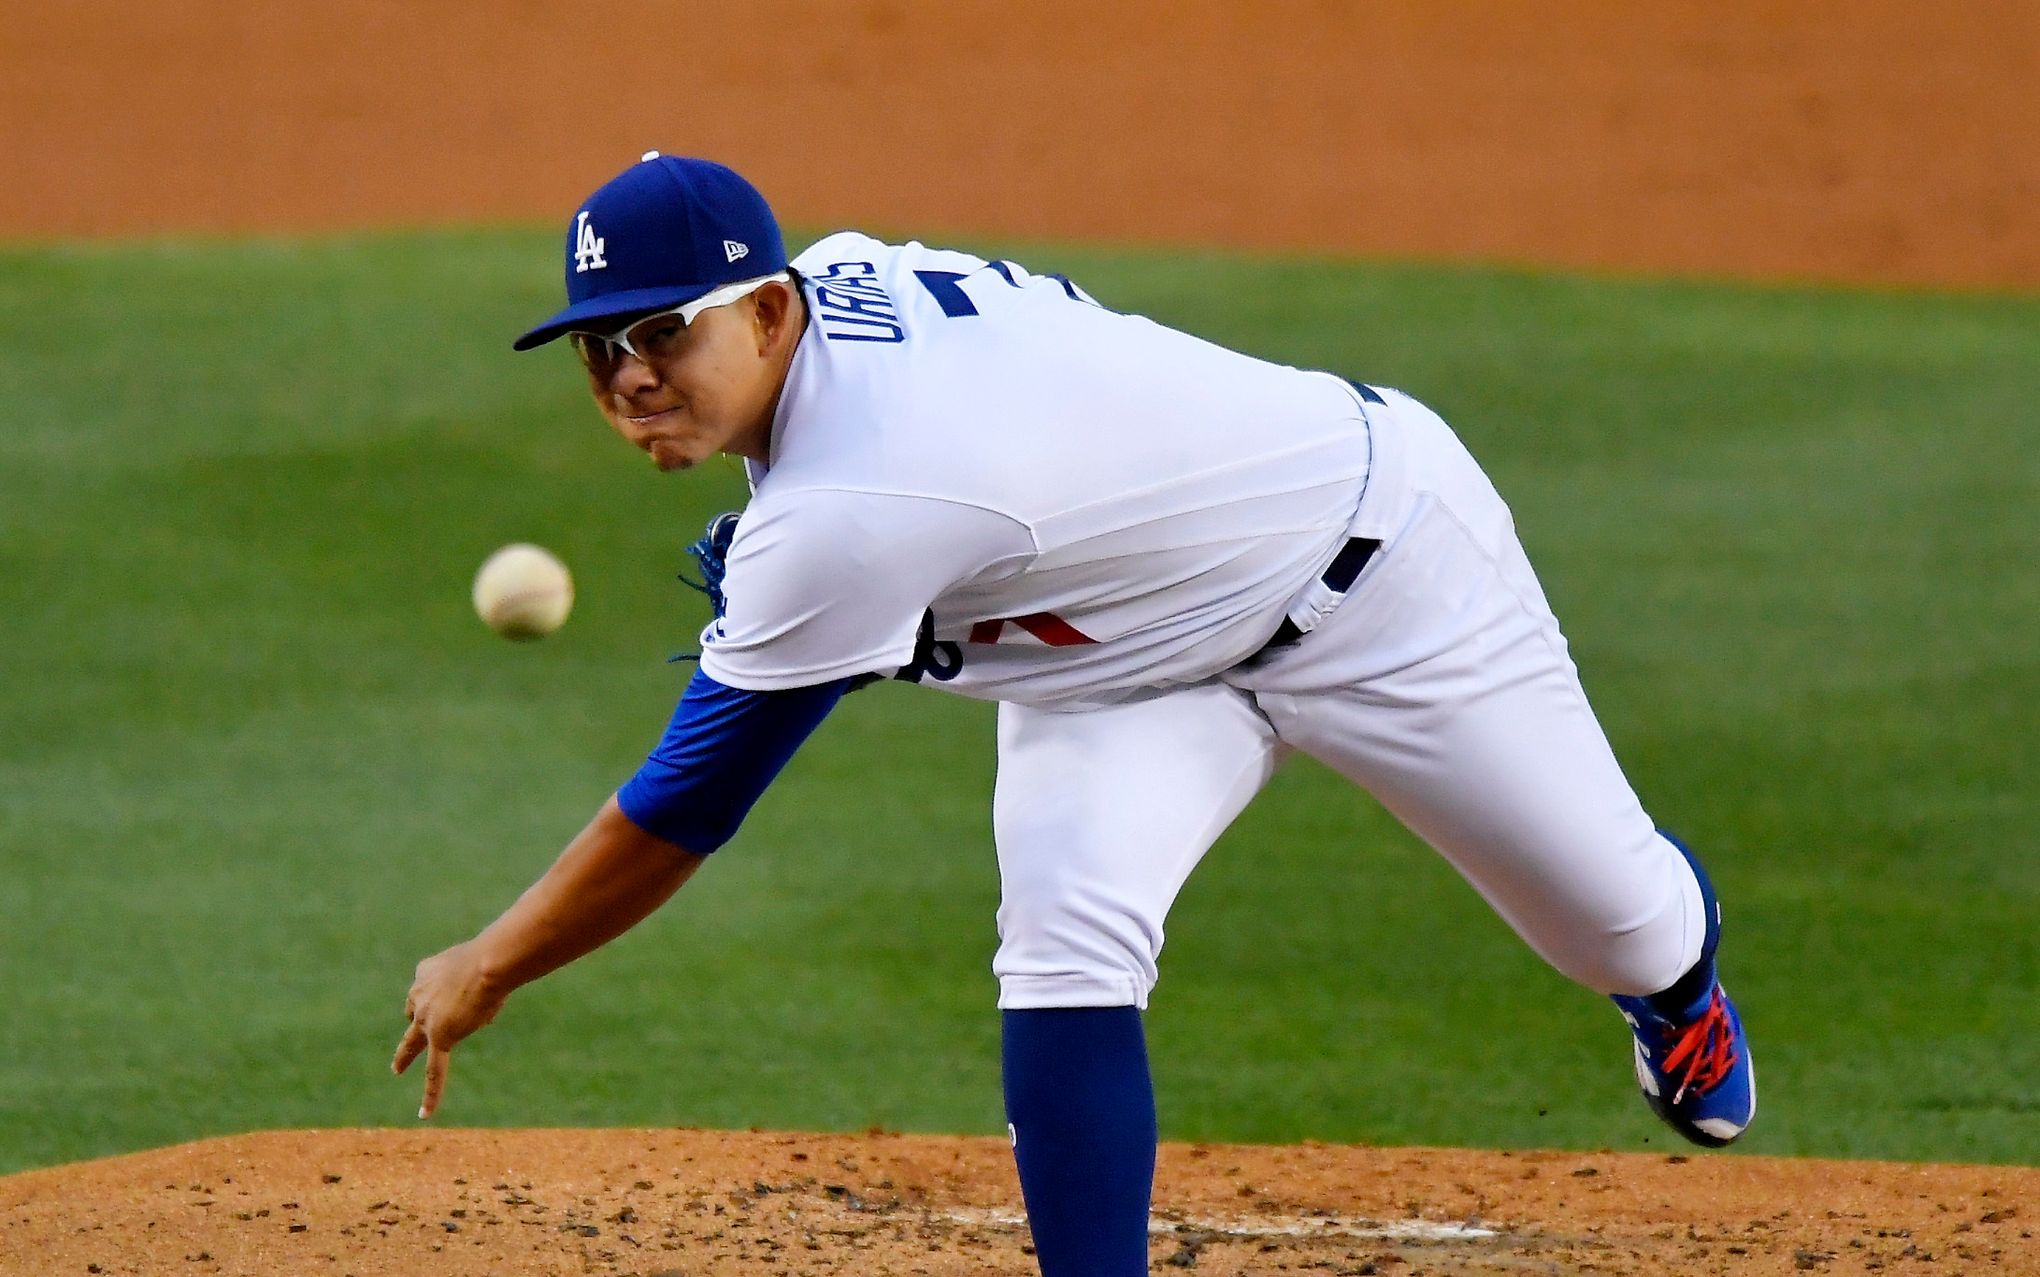 Dodgers' Urias to have season-ending shoulder surgery